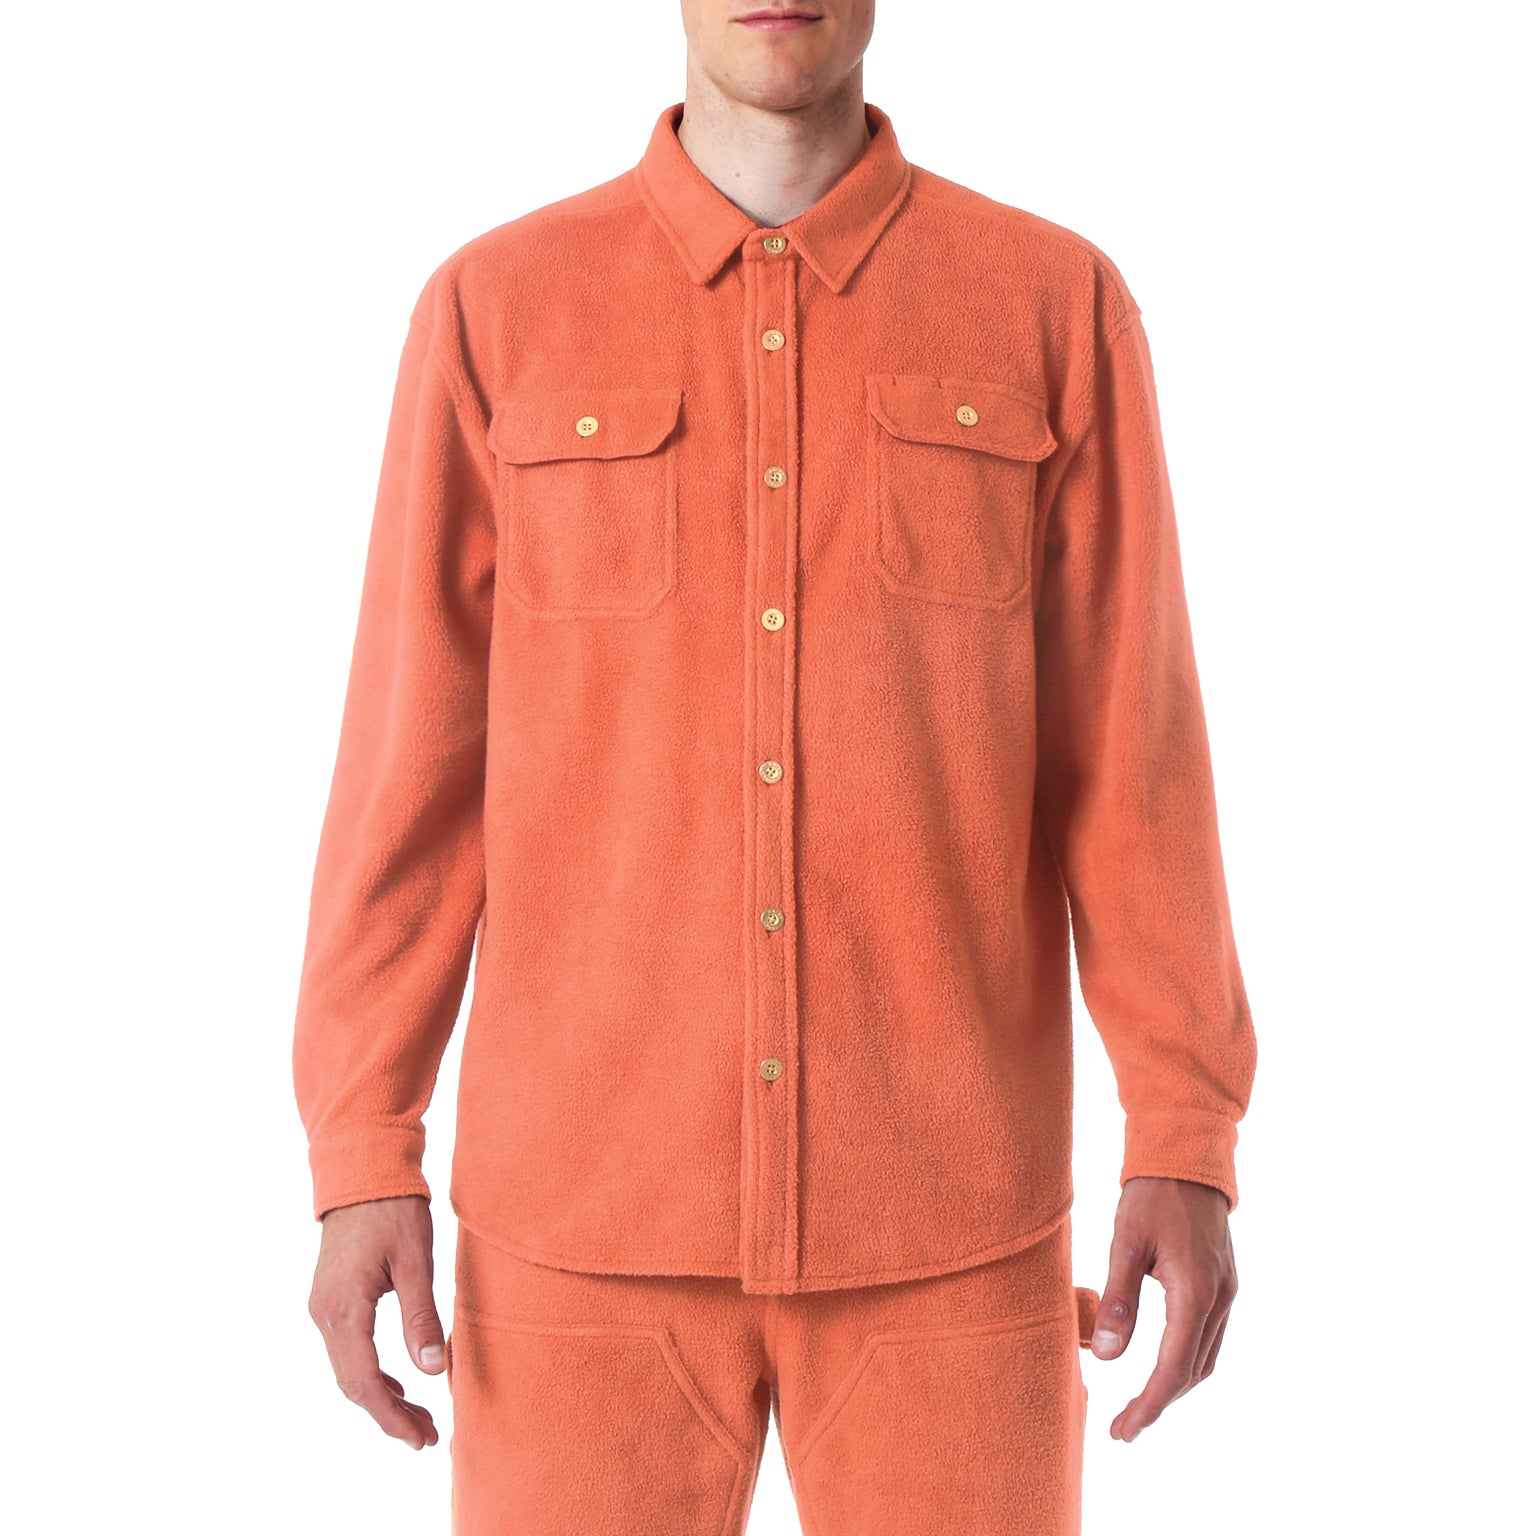 SAVE 70%- Rhubarb Solid Fleece Work Shirt